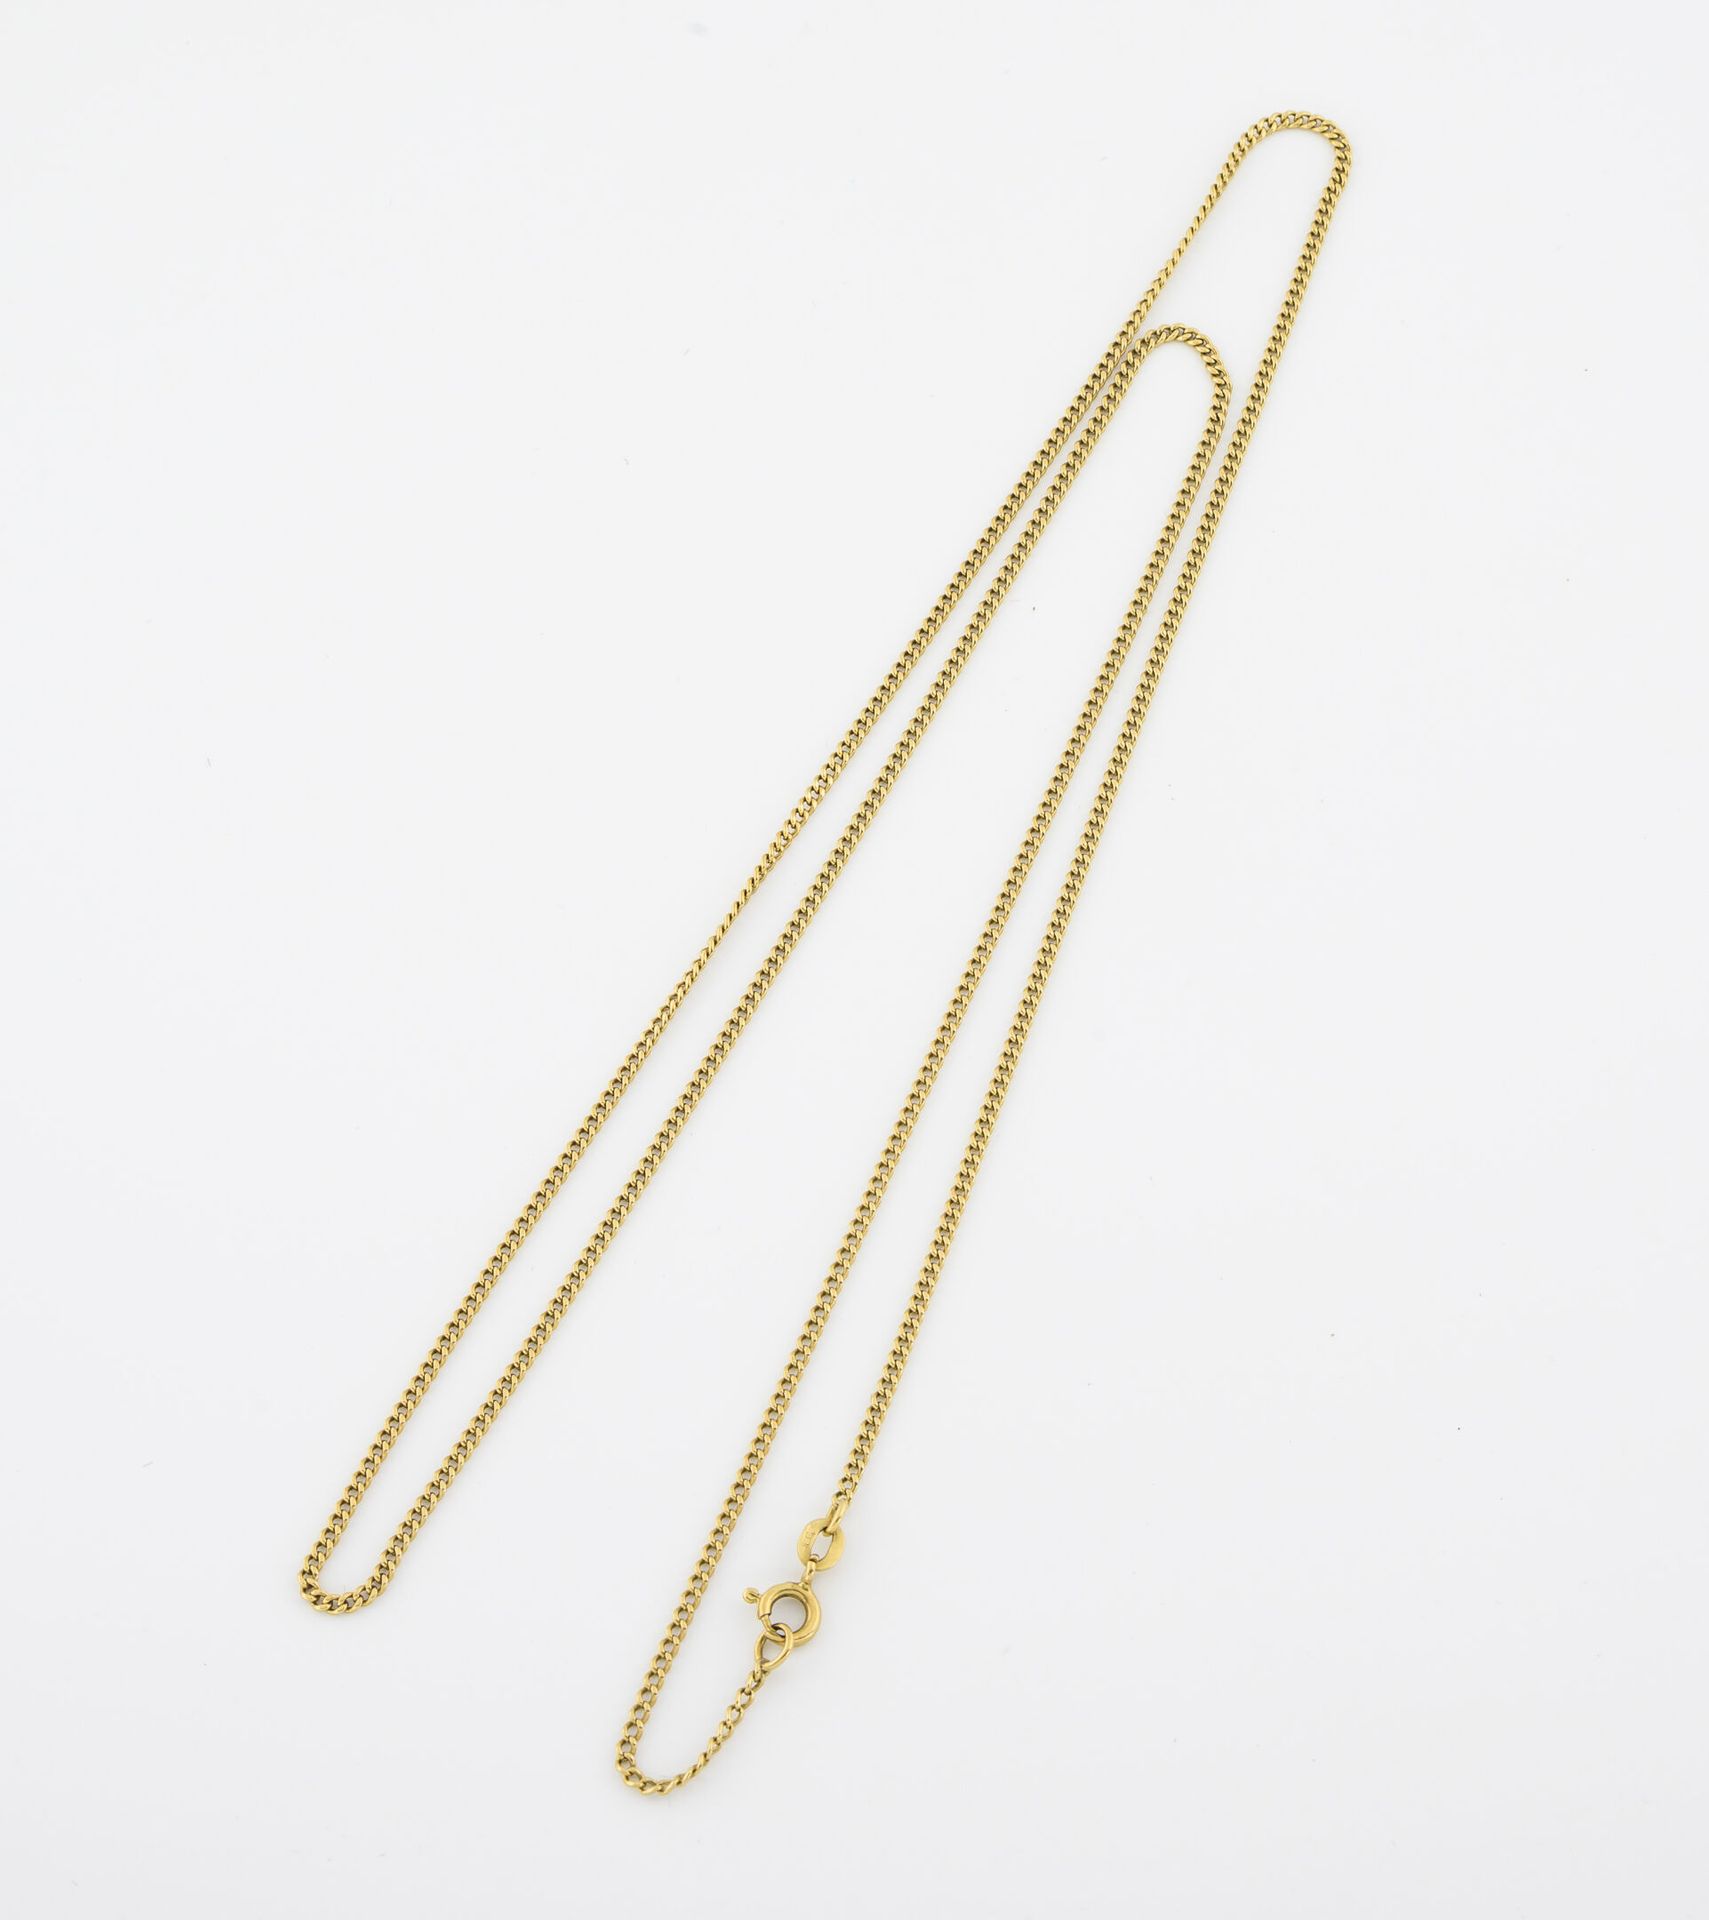 Null 黄K金(750)长项链，带卷边链。

弹簧环扣。

重量：8克。- 长度：68厘米。